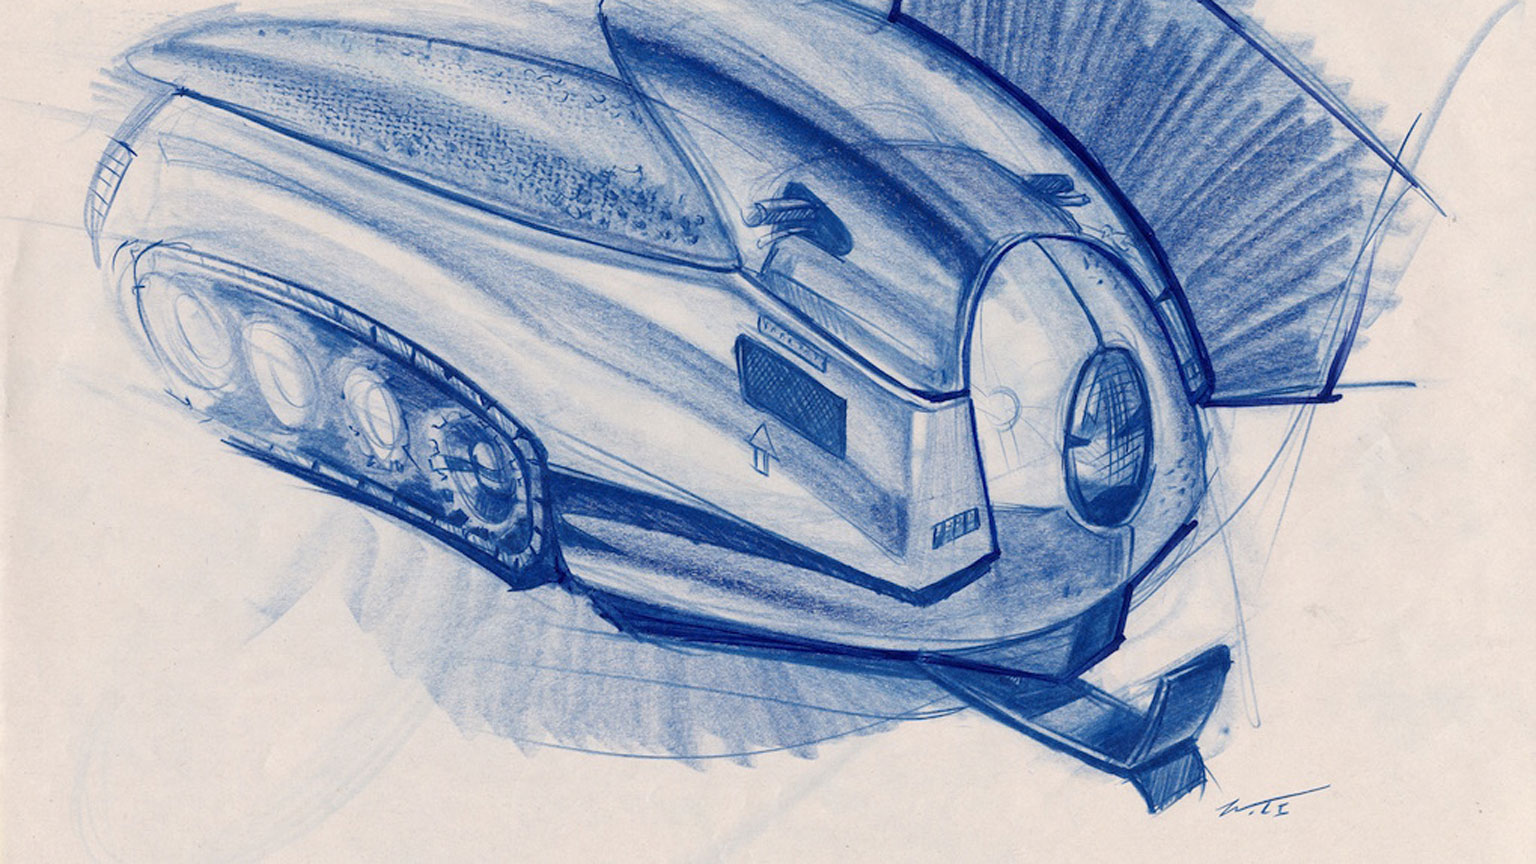 Hand-rendering of a concept vehicle, drawn for Design Bloc's interdisciplinary capstone design course.